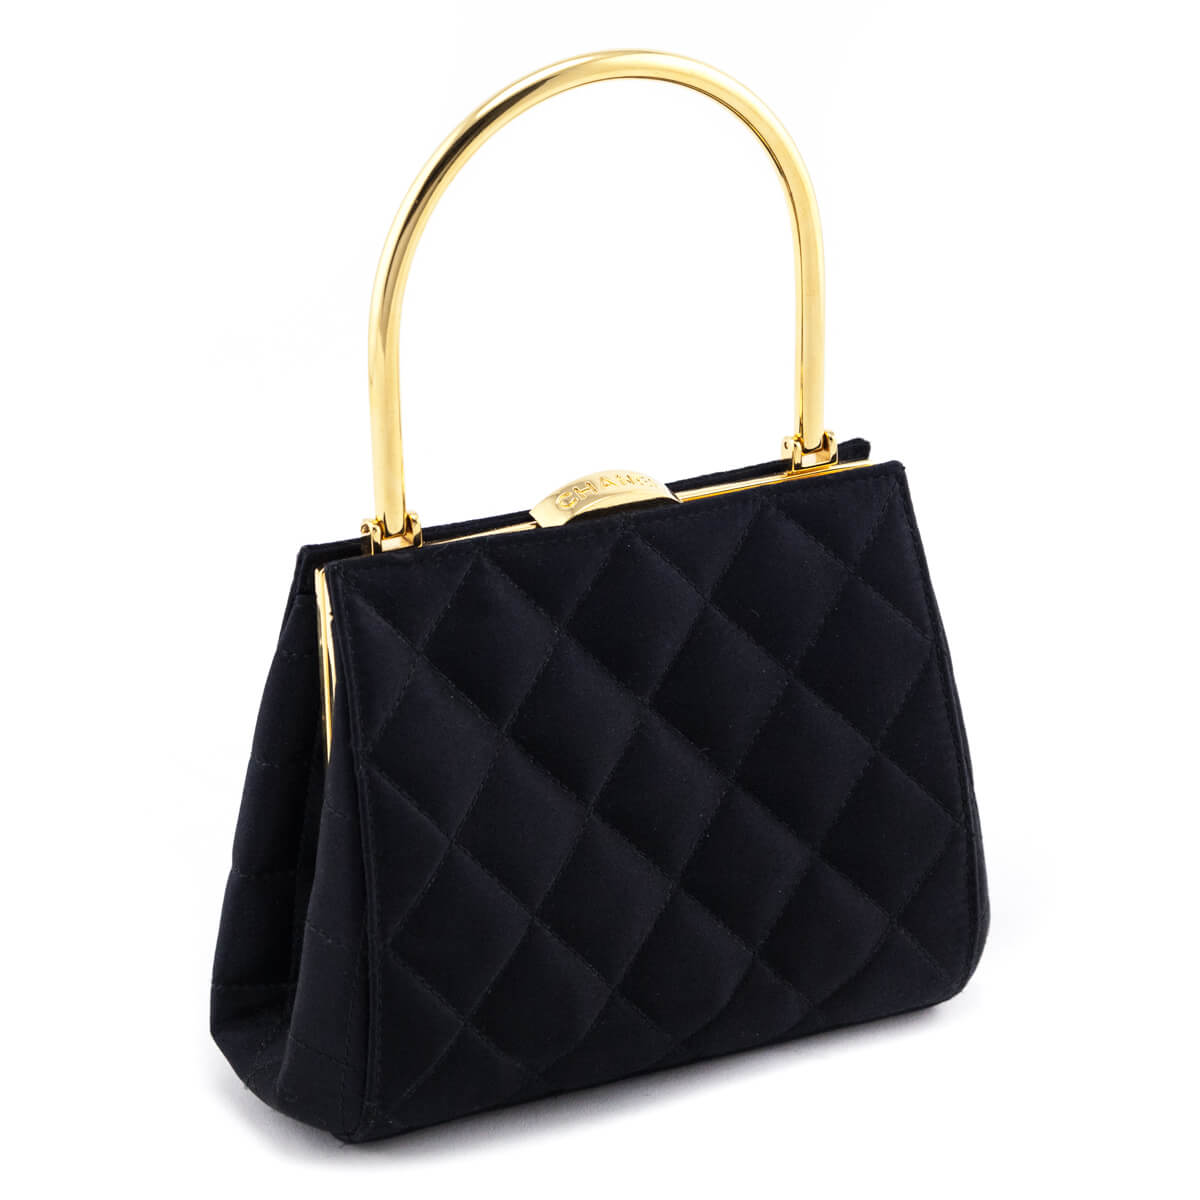 Chanel Black Satin Vintage Quilted Frame Evening Bag - Love that Bag etc - Preowned Authentic Designer Handbags & Preloved Fashions